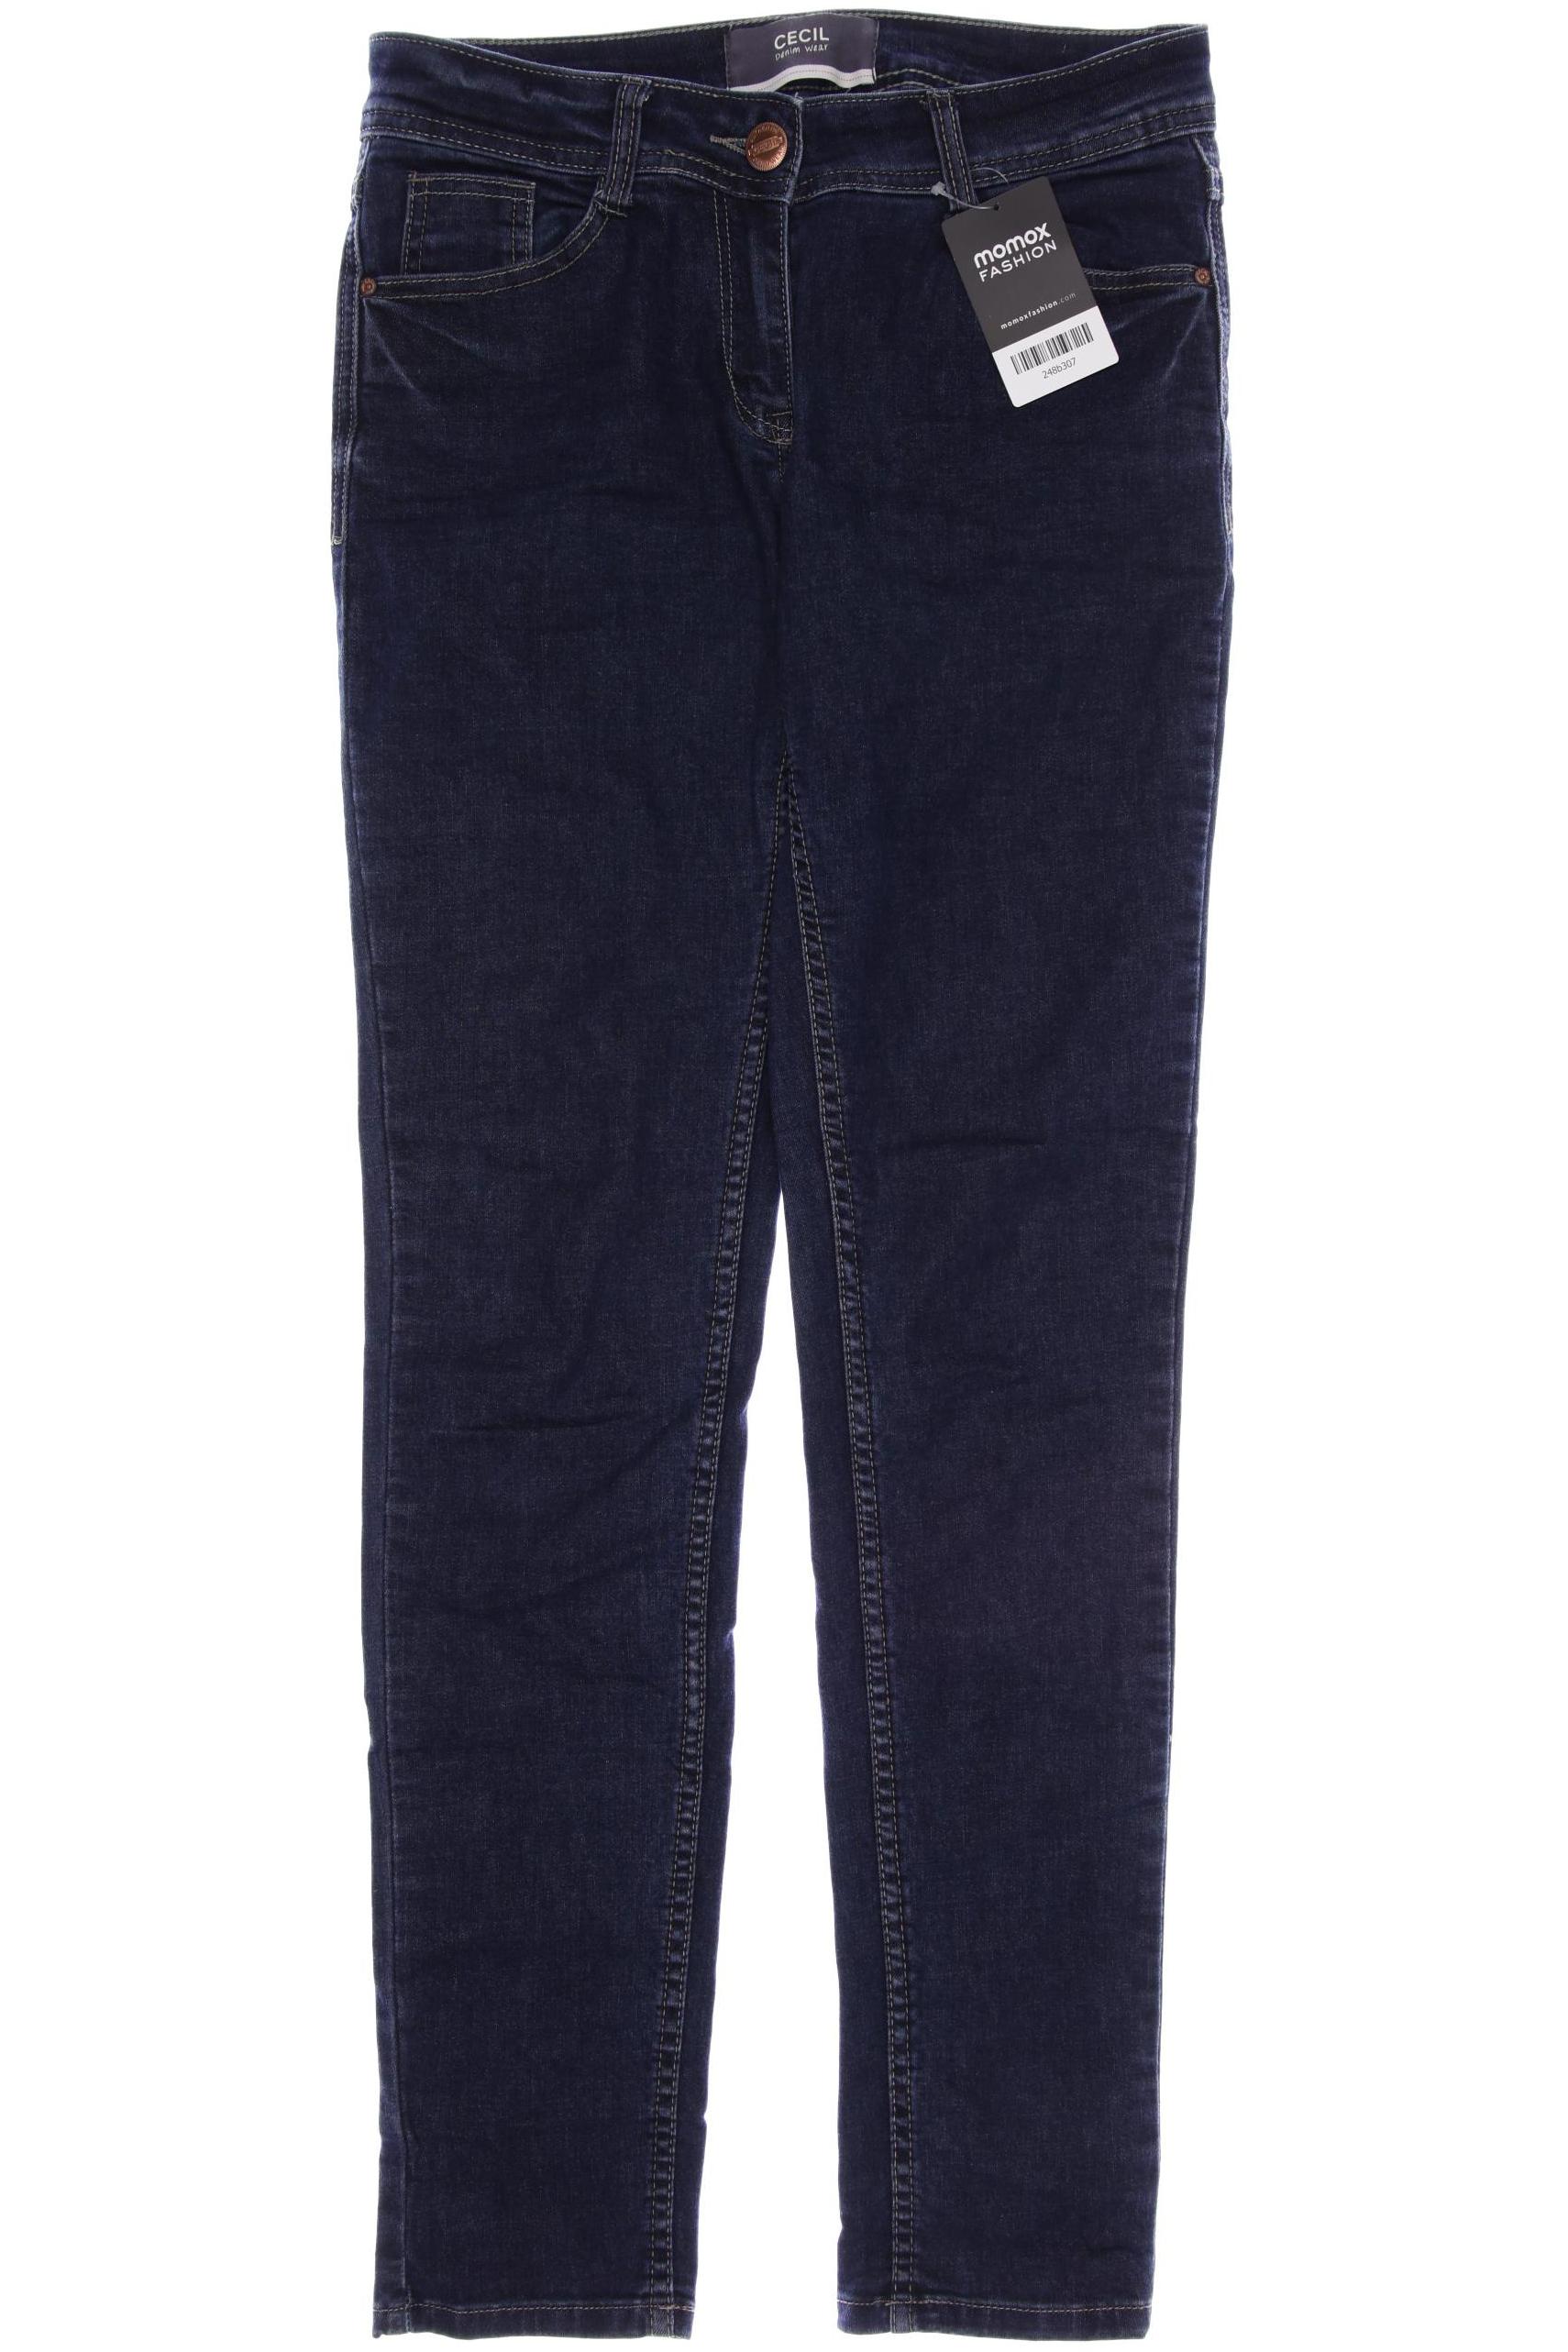 Cecil Damen Jeans, marineblau, Gr. 34 von cecil